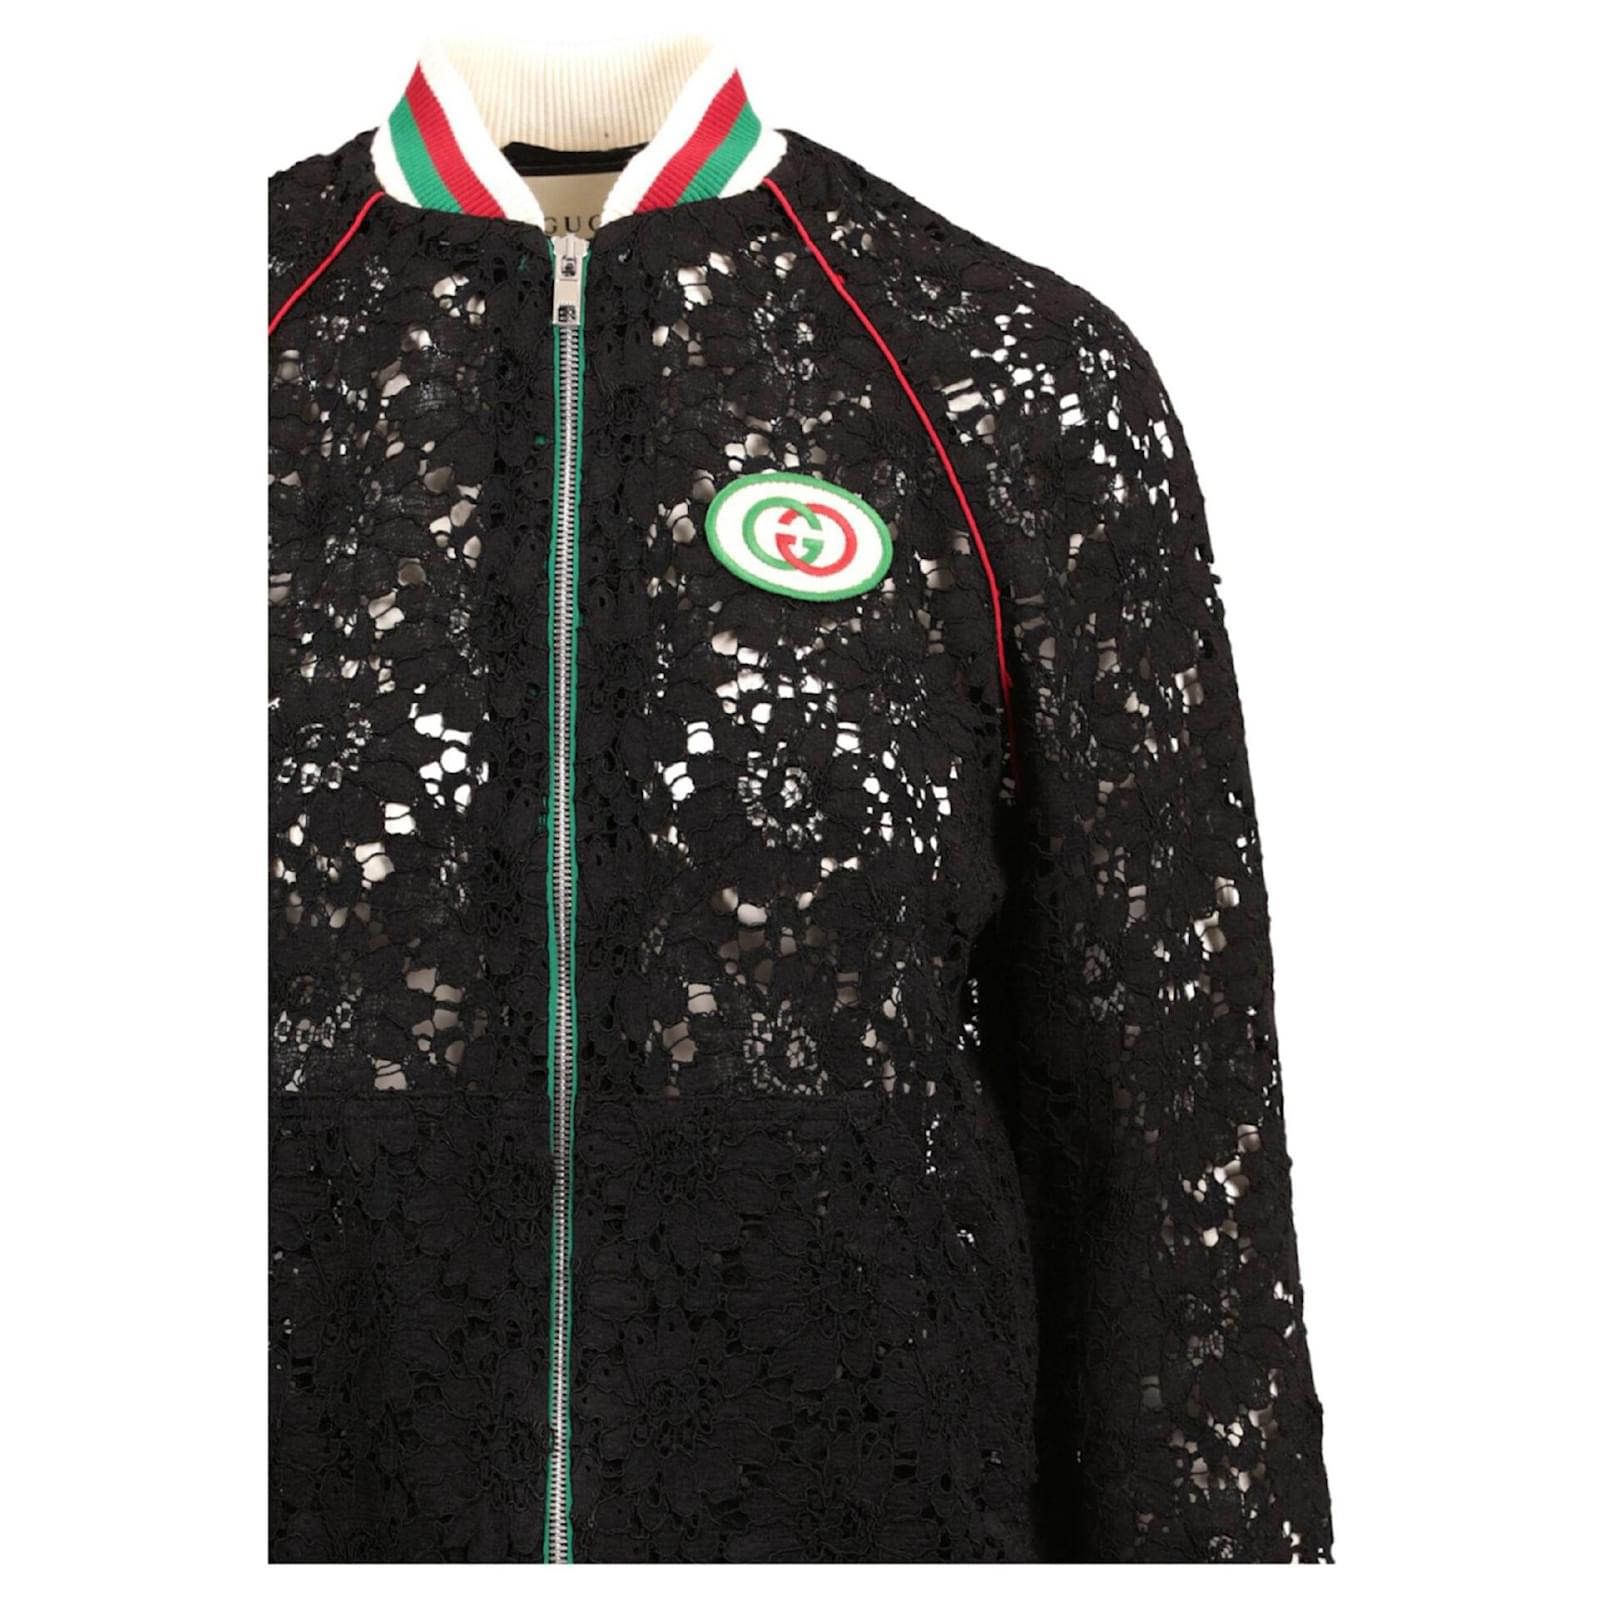 Gucci, Jackets & Coats, Gucci Lace Floral Bomber Jacket